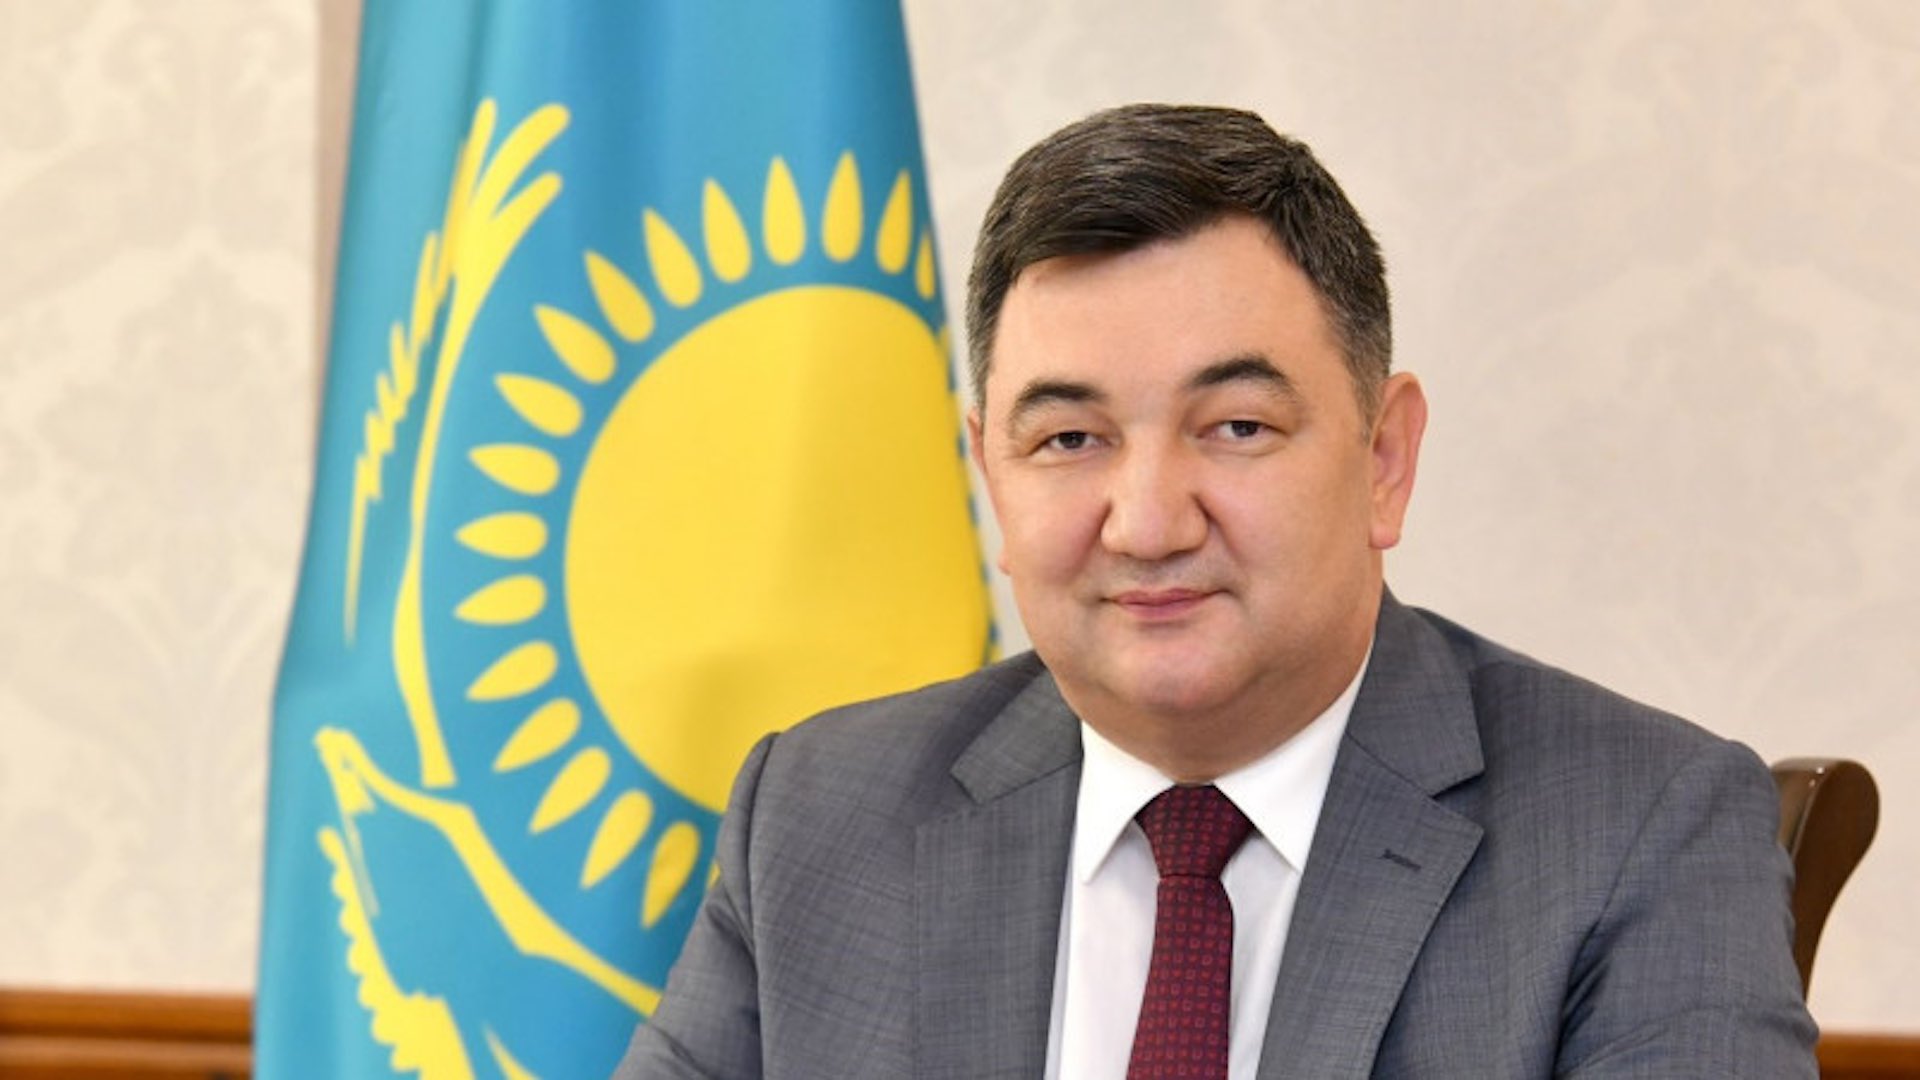 Дархан Кыдырали стал депутатом Сената Парламента РК после ухода Аскара Шакирова